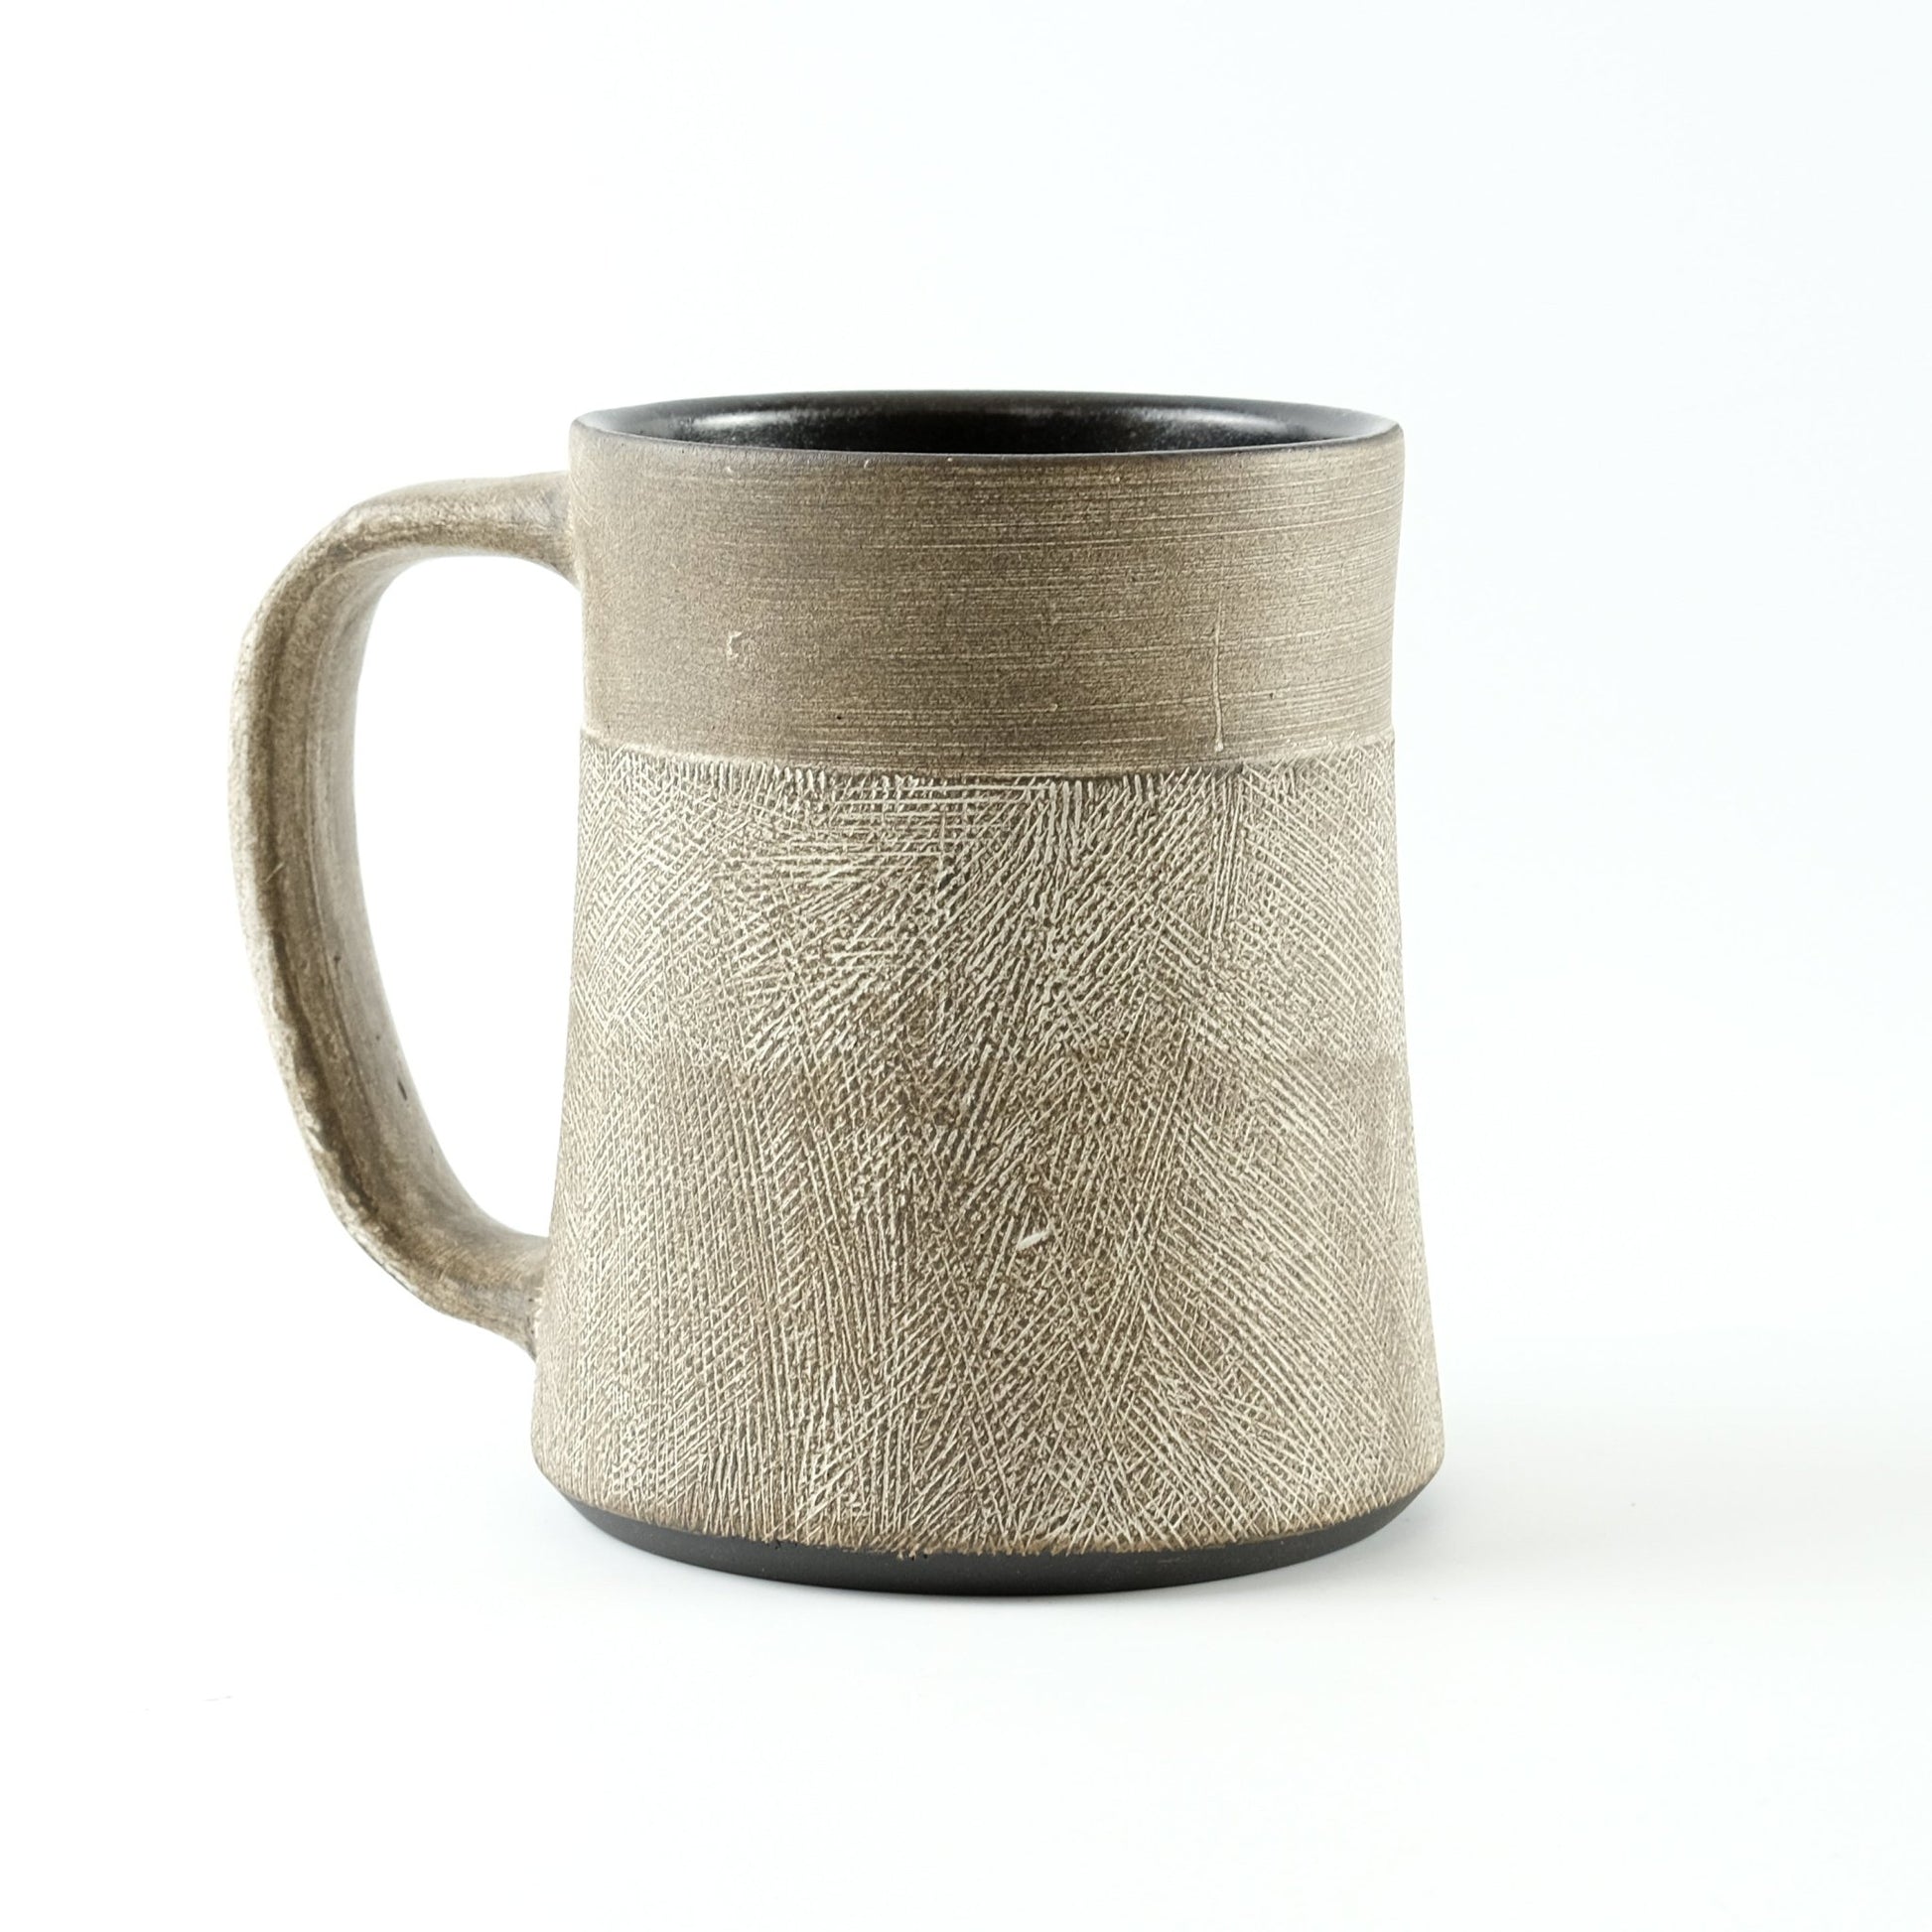 Mug - 1 - Adrea Davina Beres Ceramics